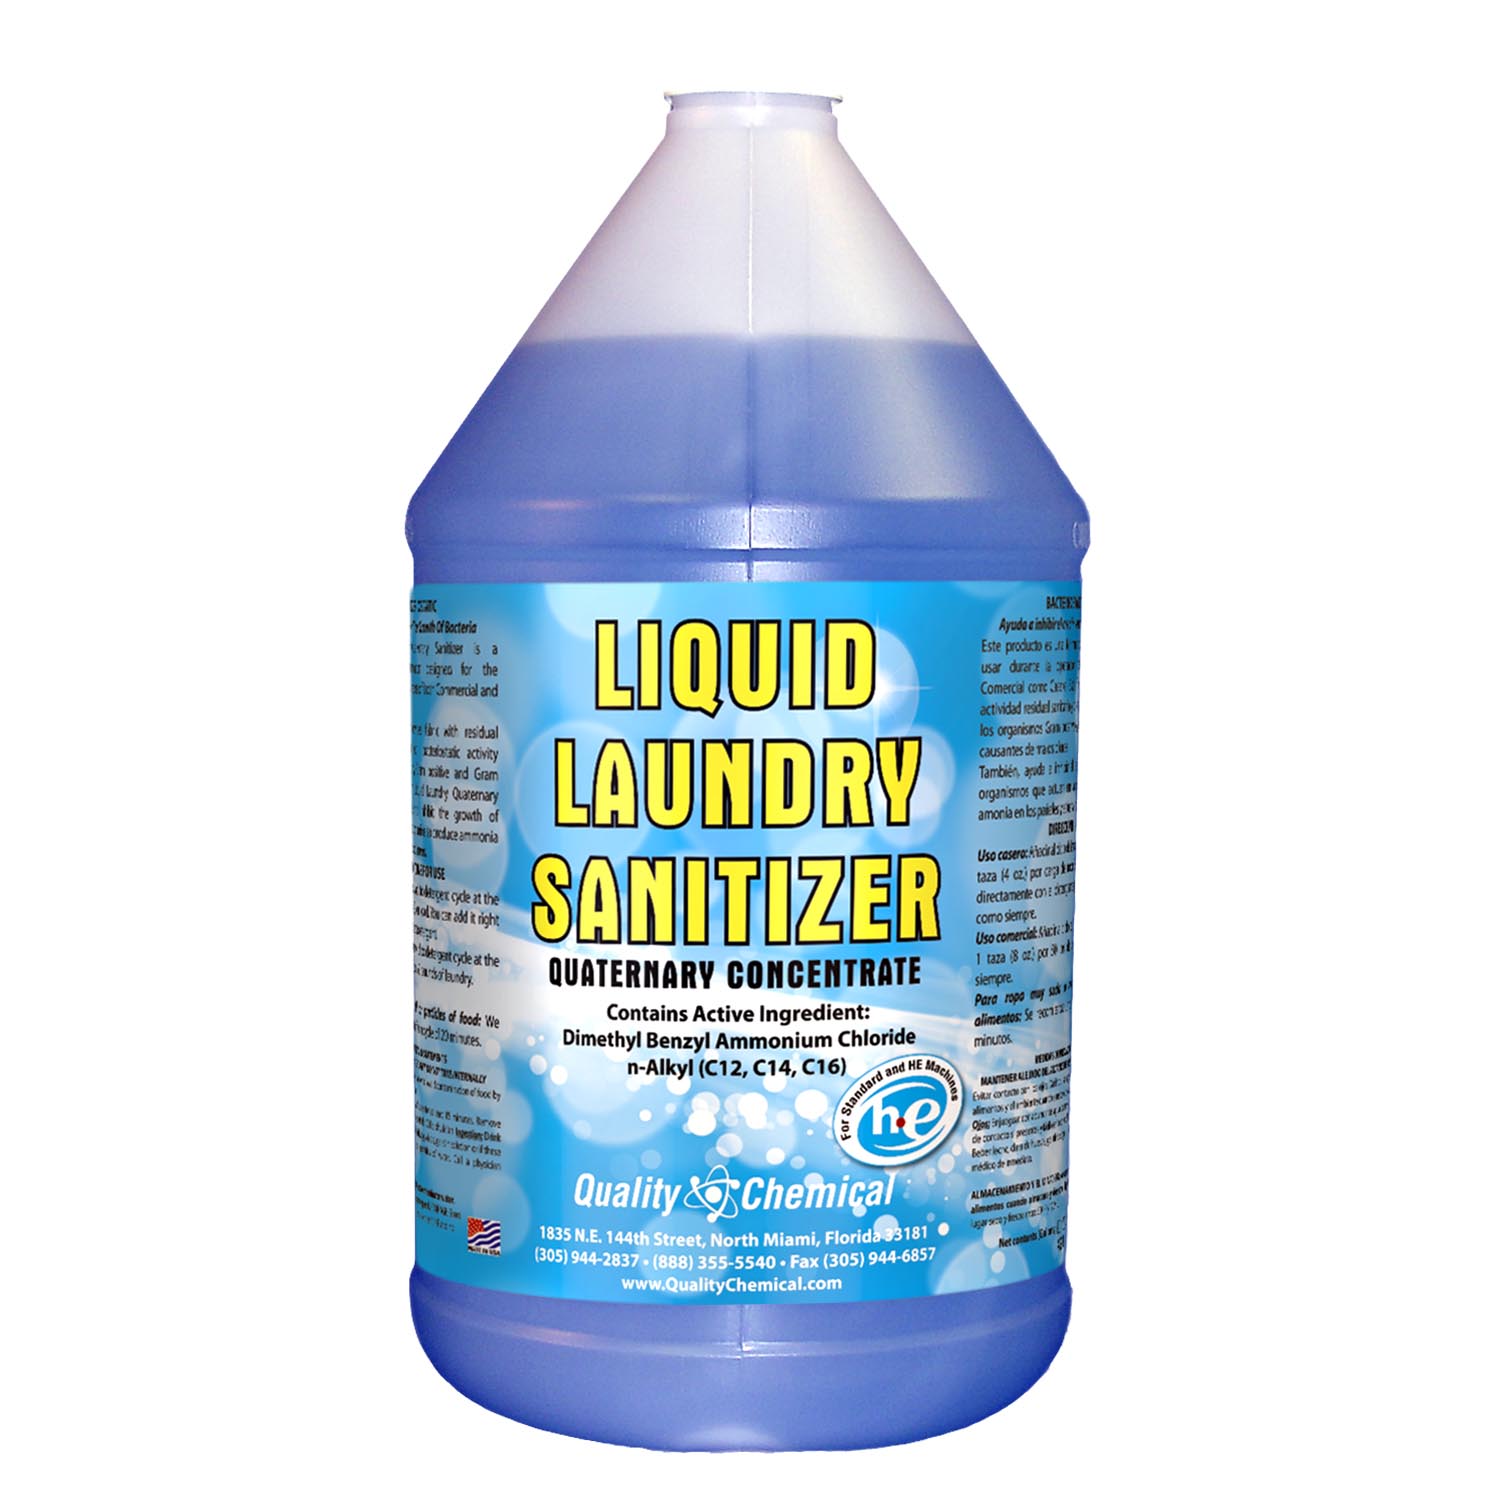 Quality Chemical Company - Laundry Sanitizer